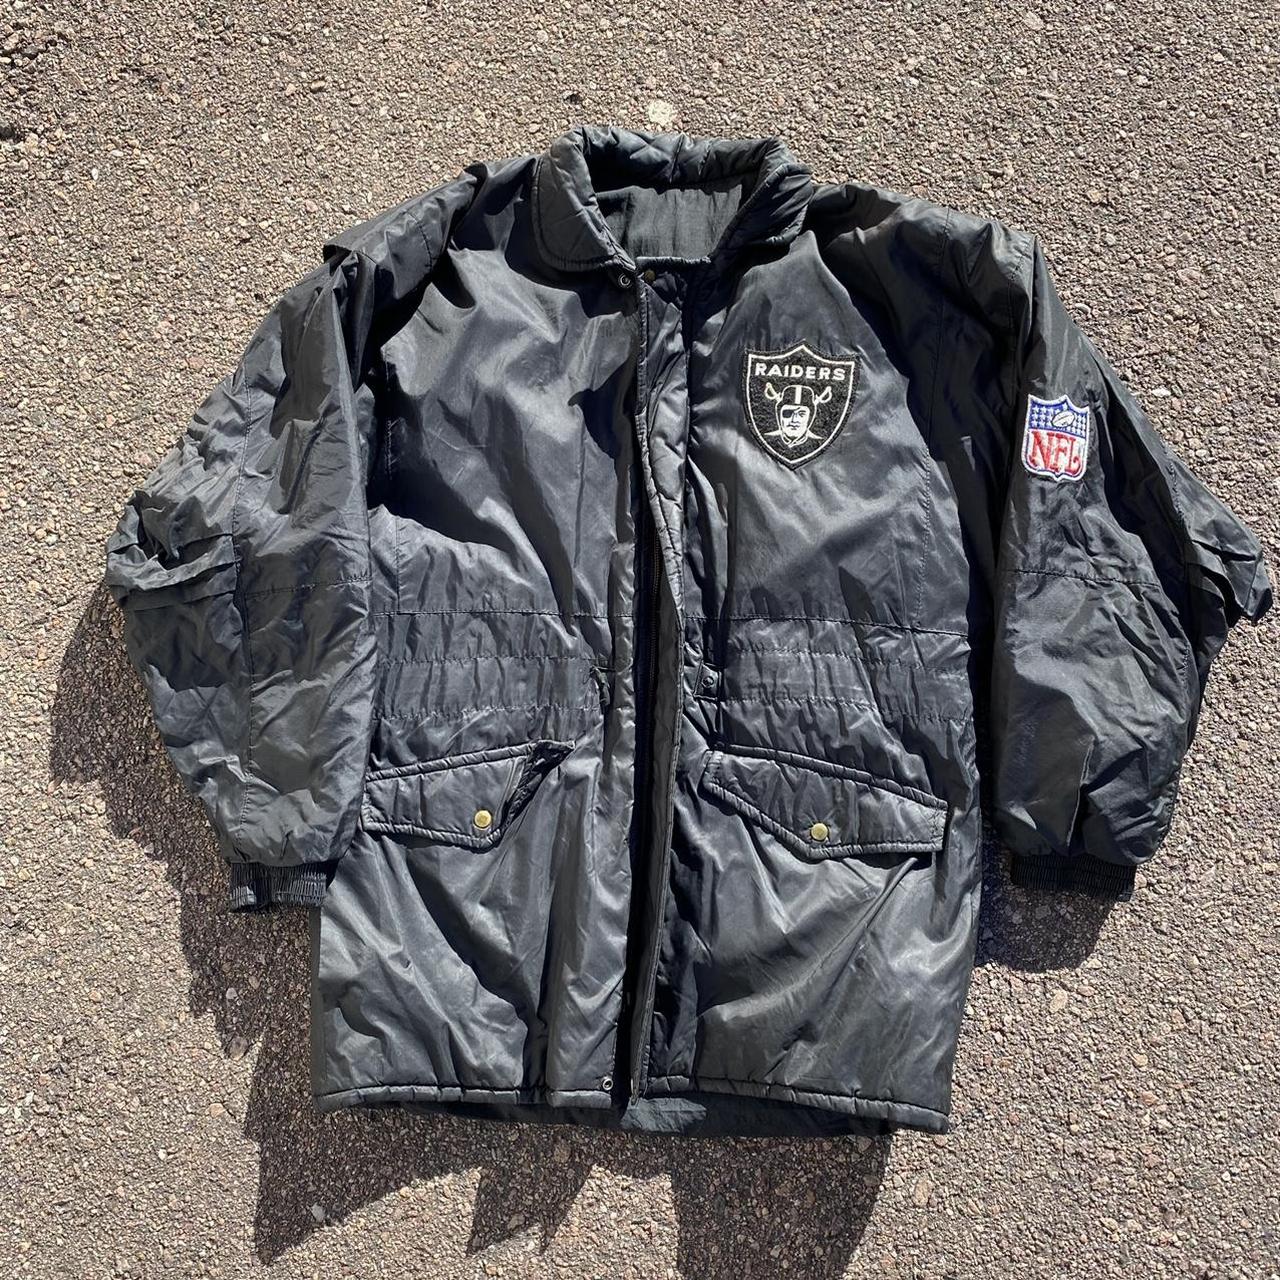 Jacket Makers Las Vegas Raiders Starter Grey and Black Jacket